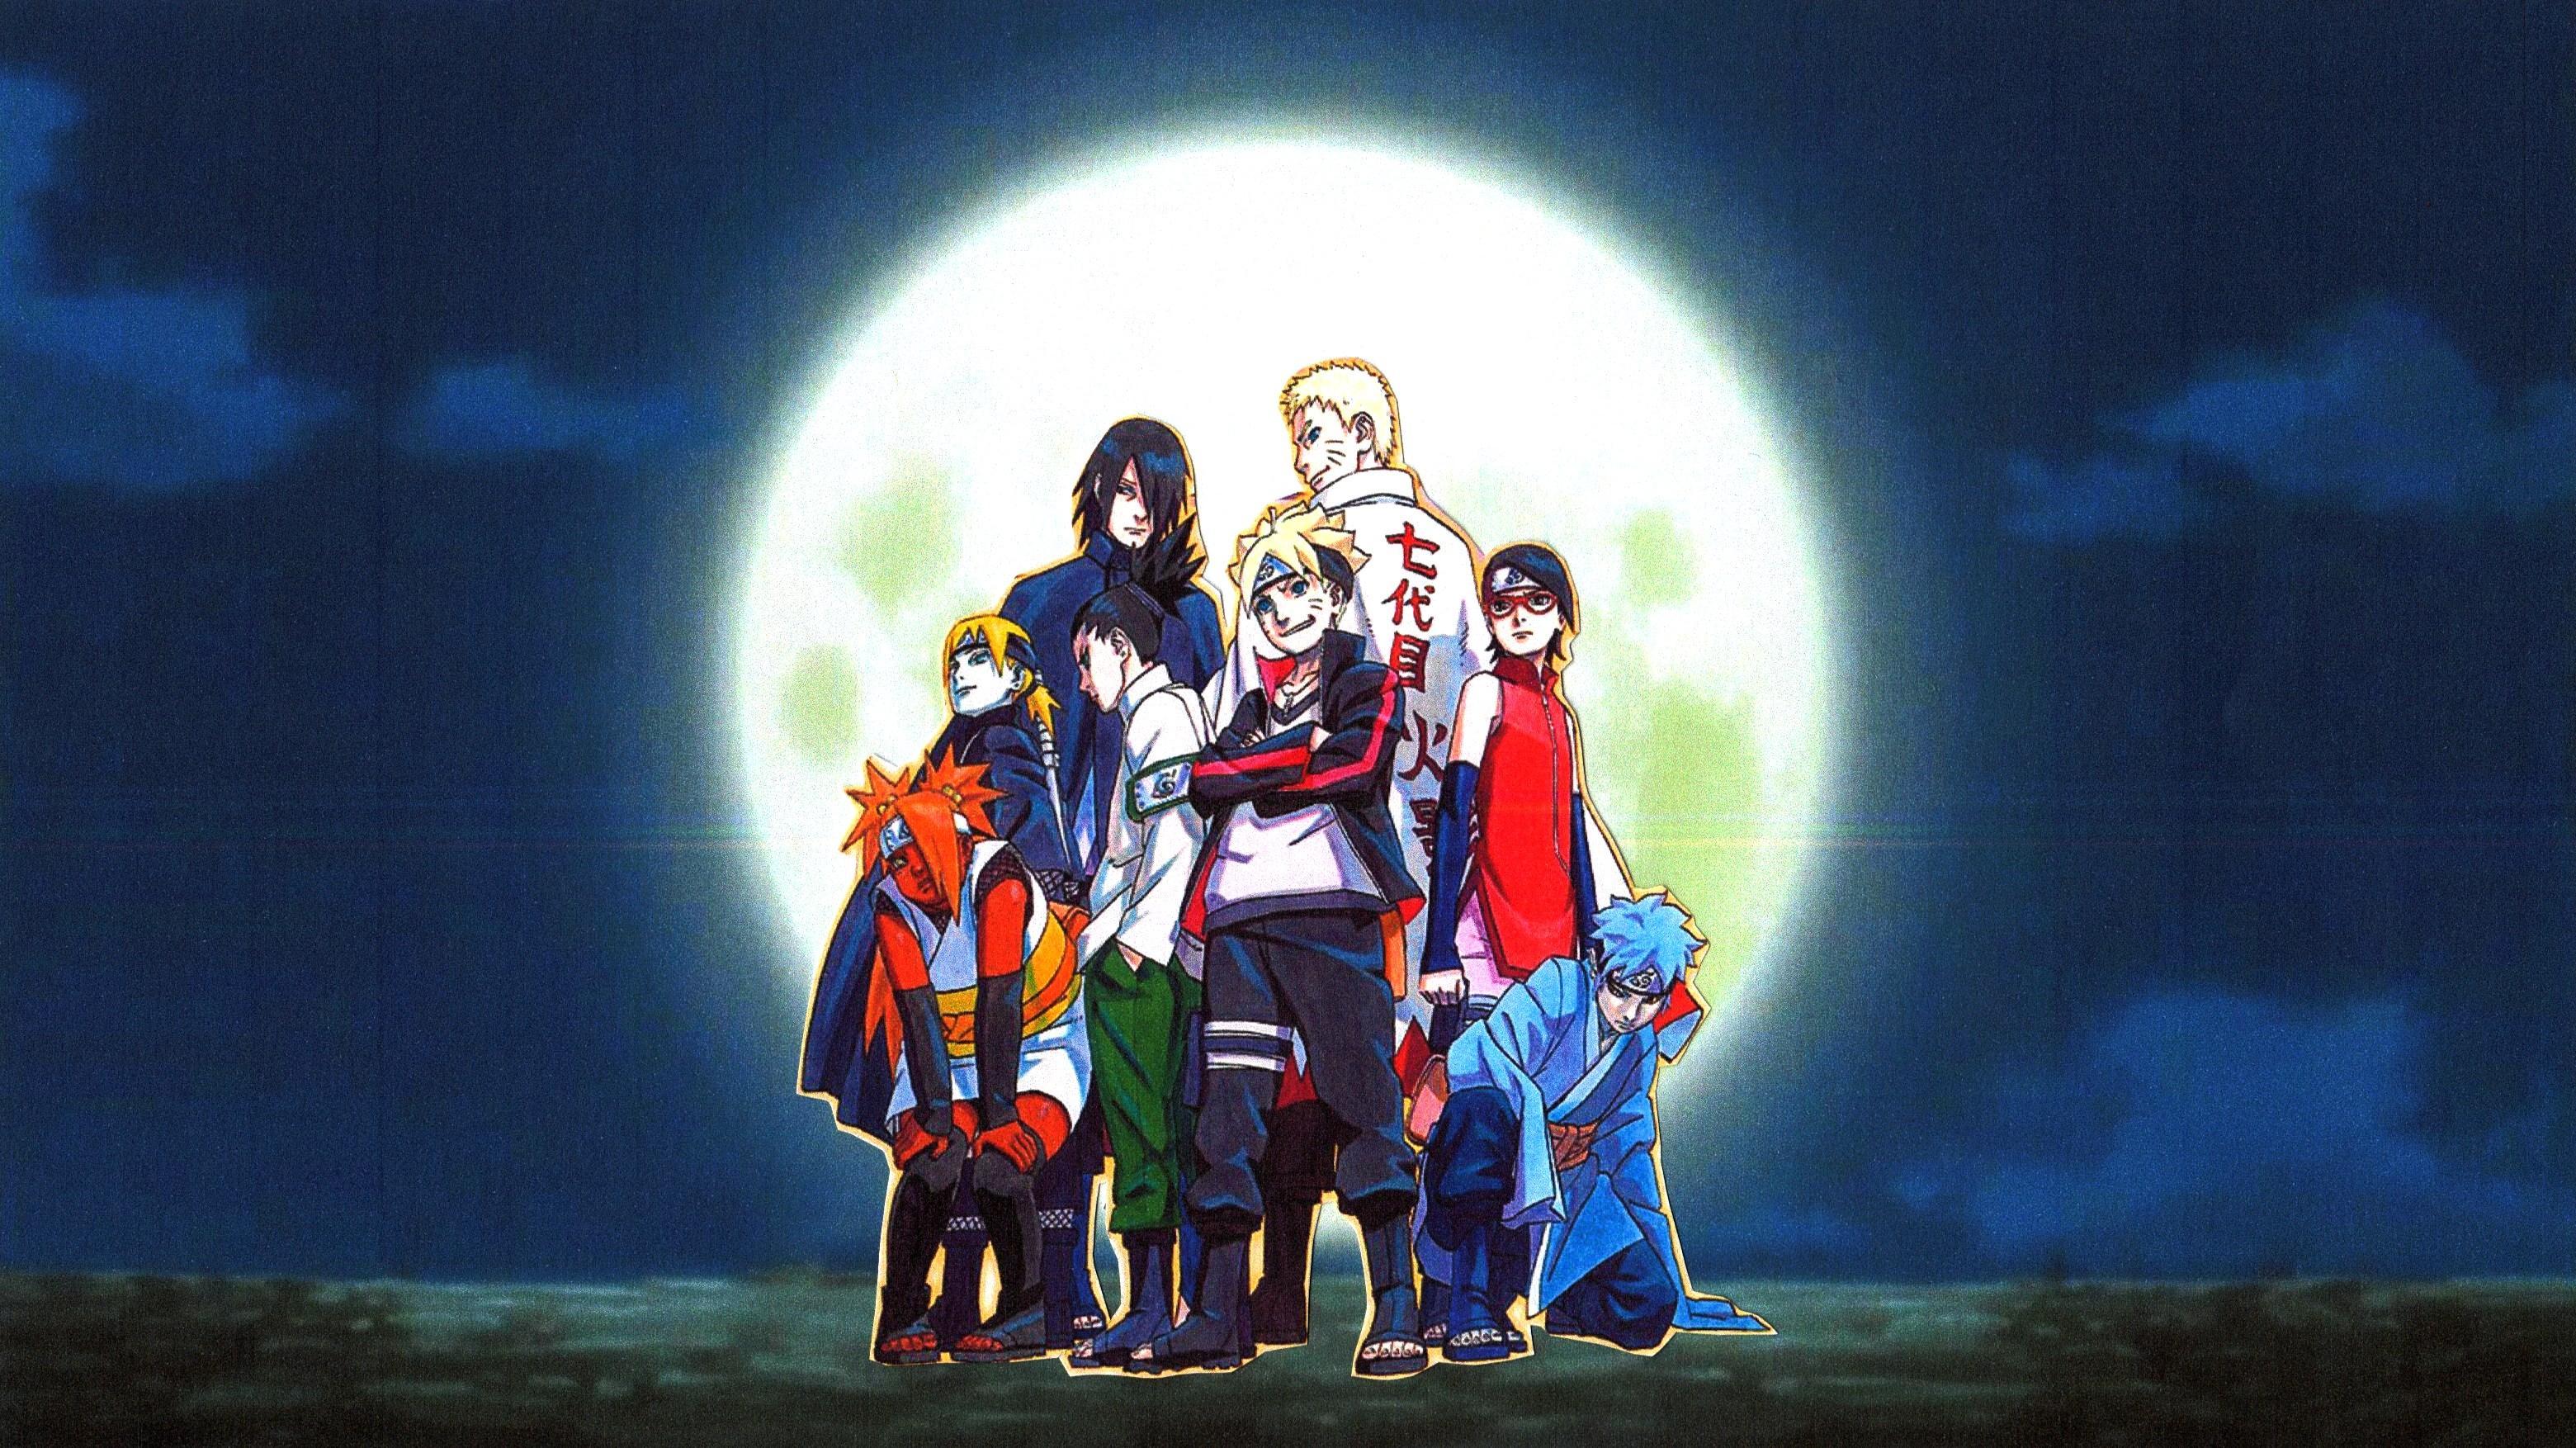 Boruto Naruto The Movie Wallpaper 2 by weissdrum on DeviantArt